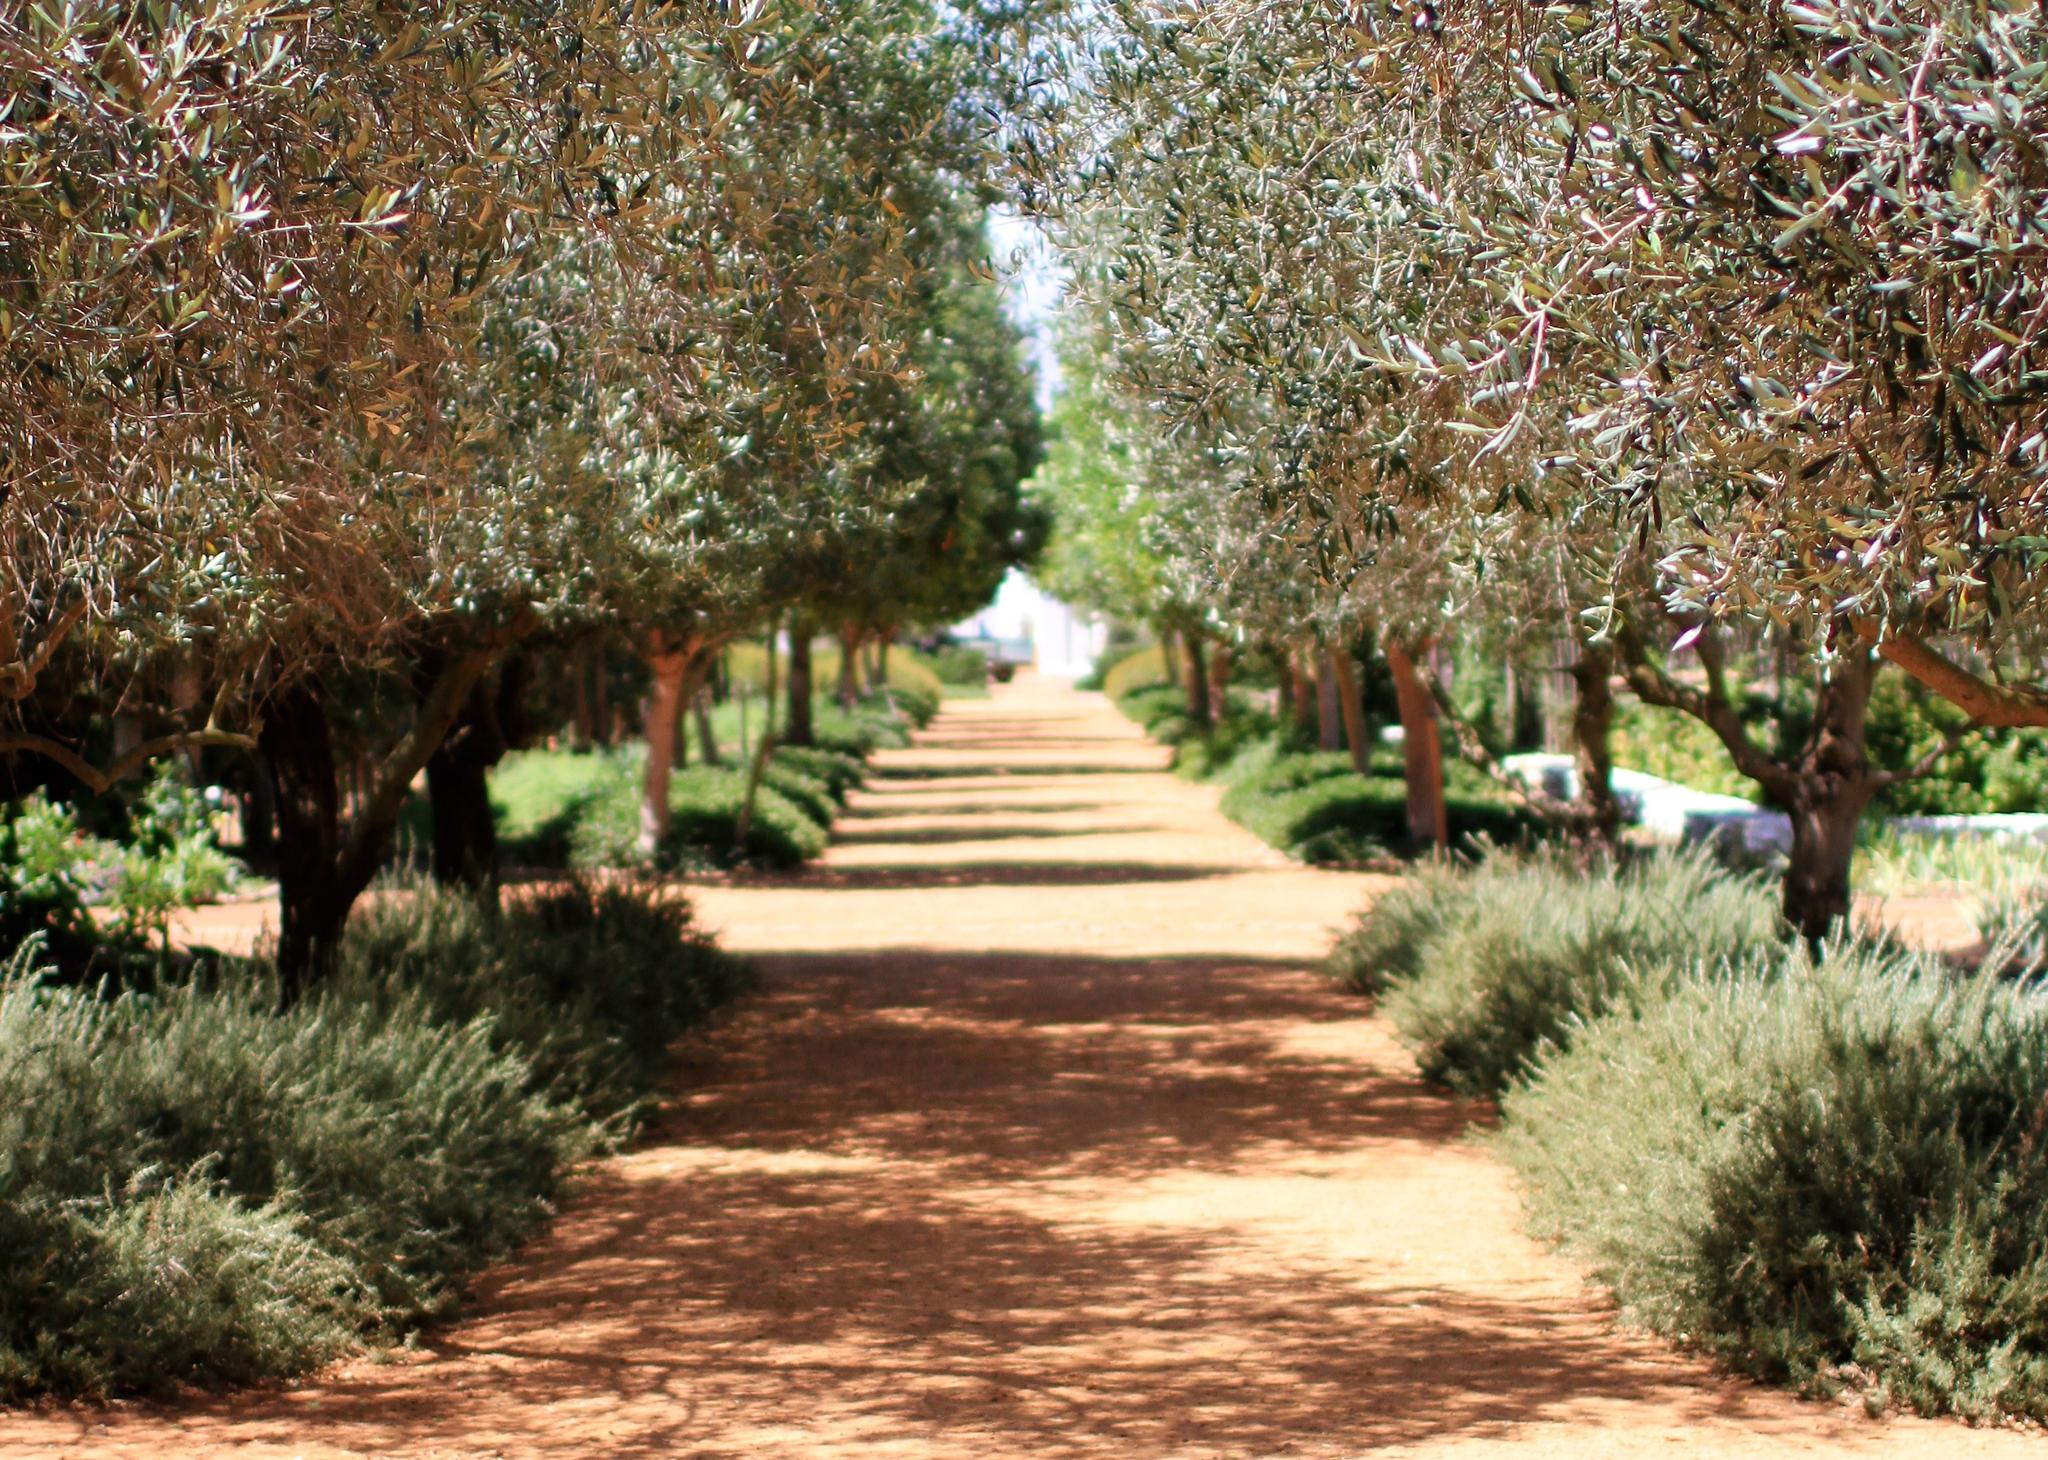 Olive Harvesting Season Celebration